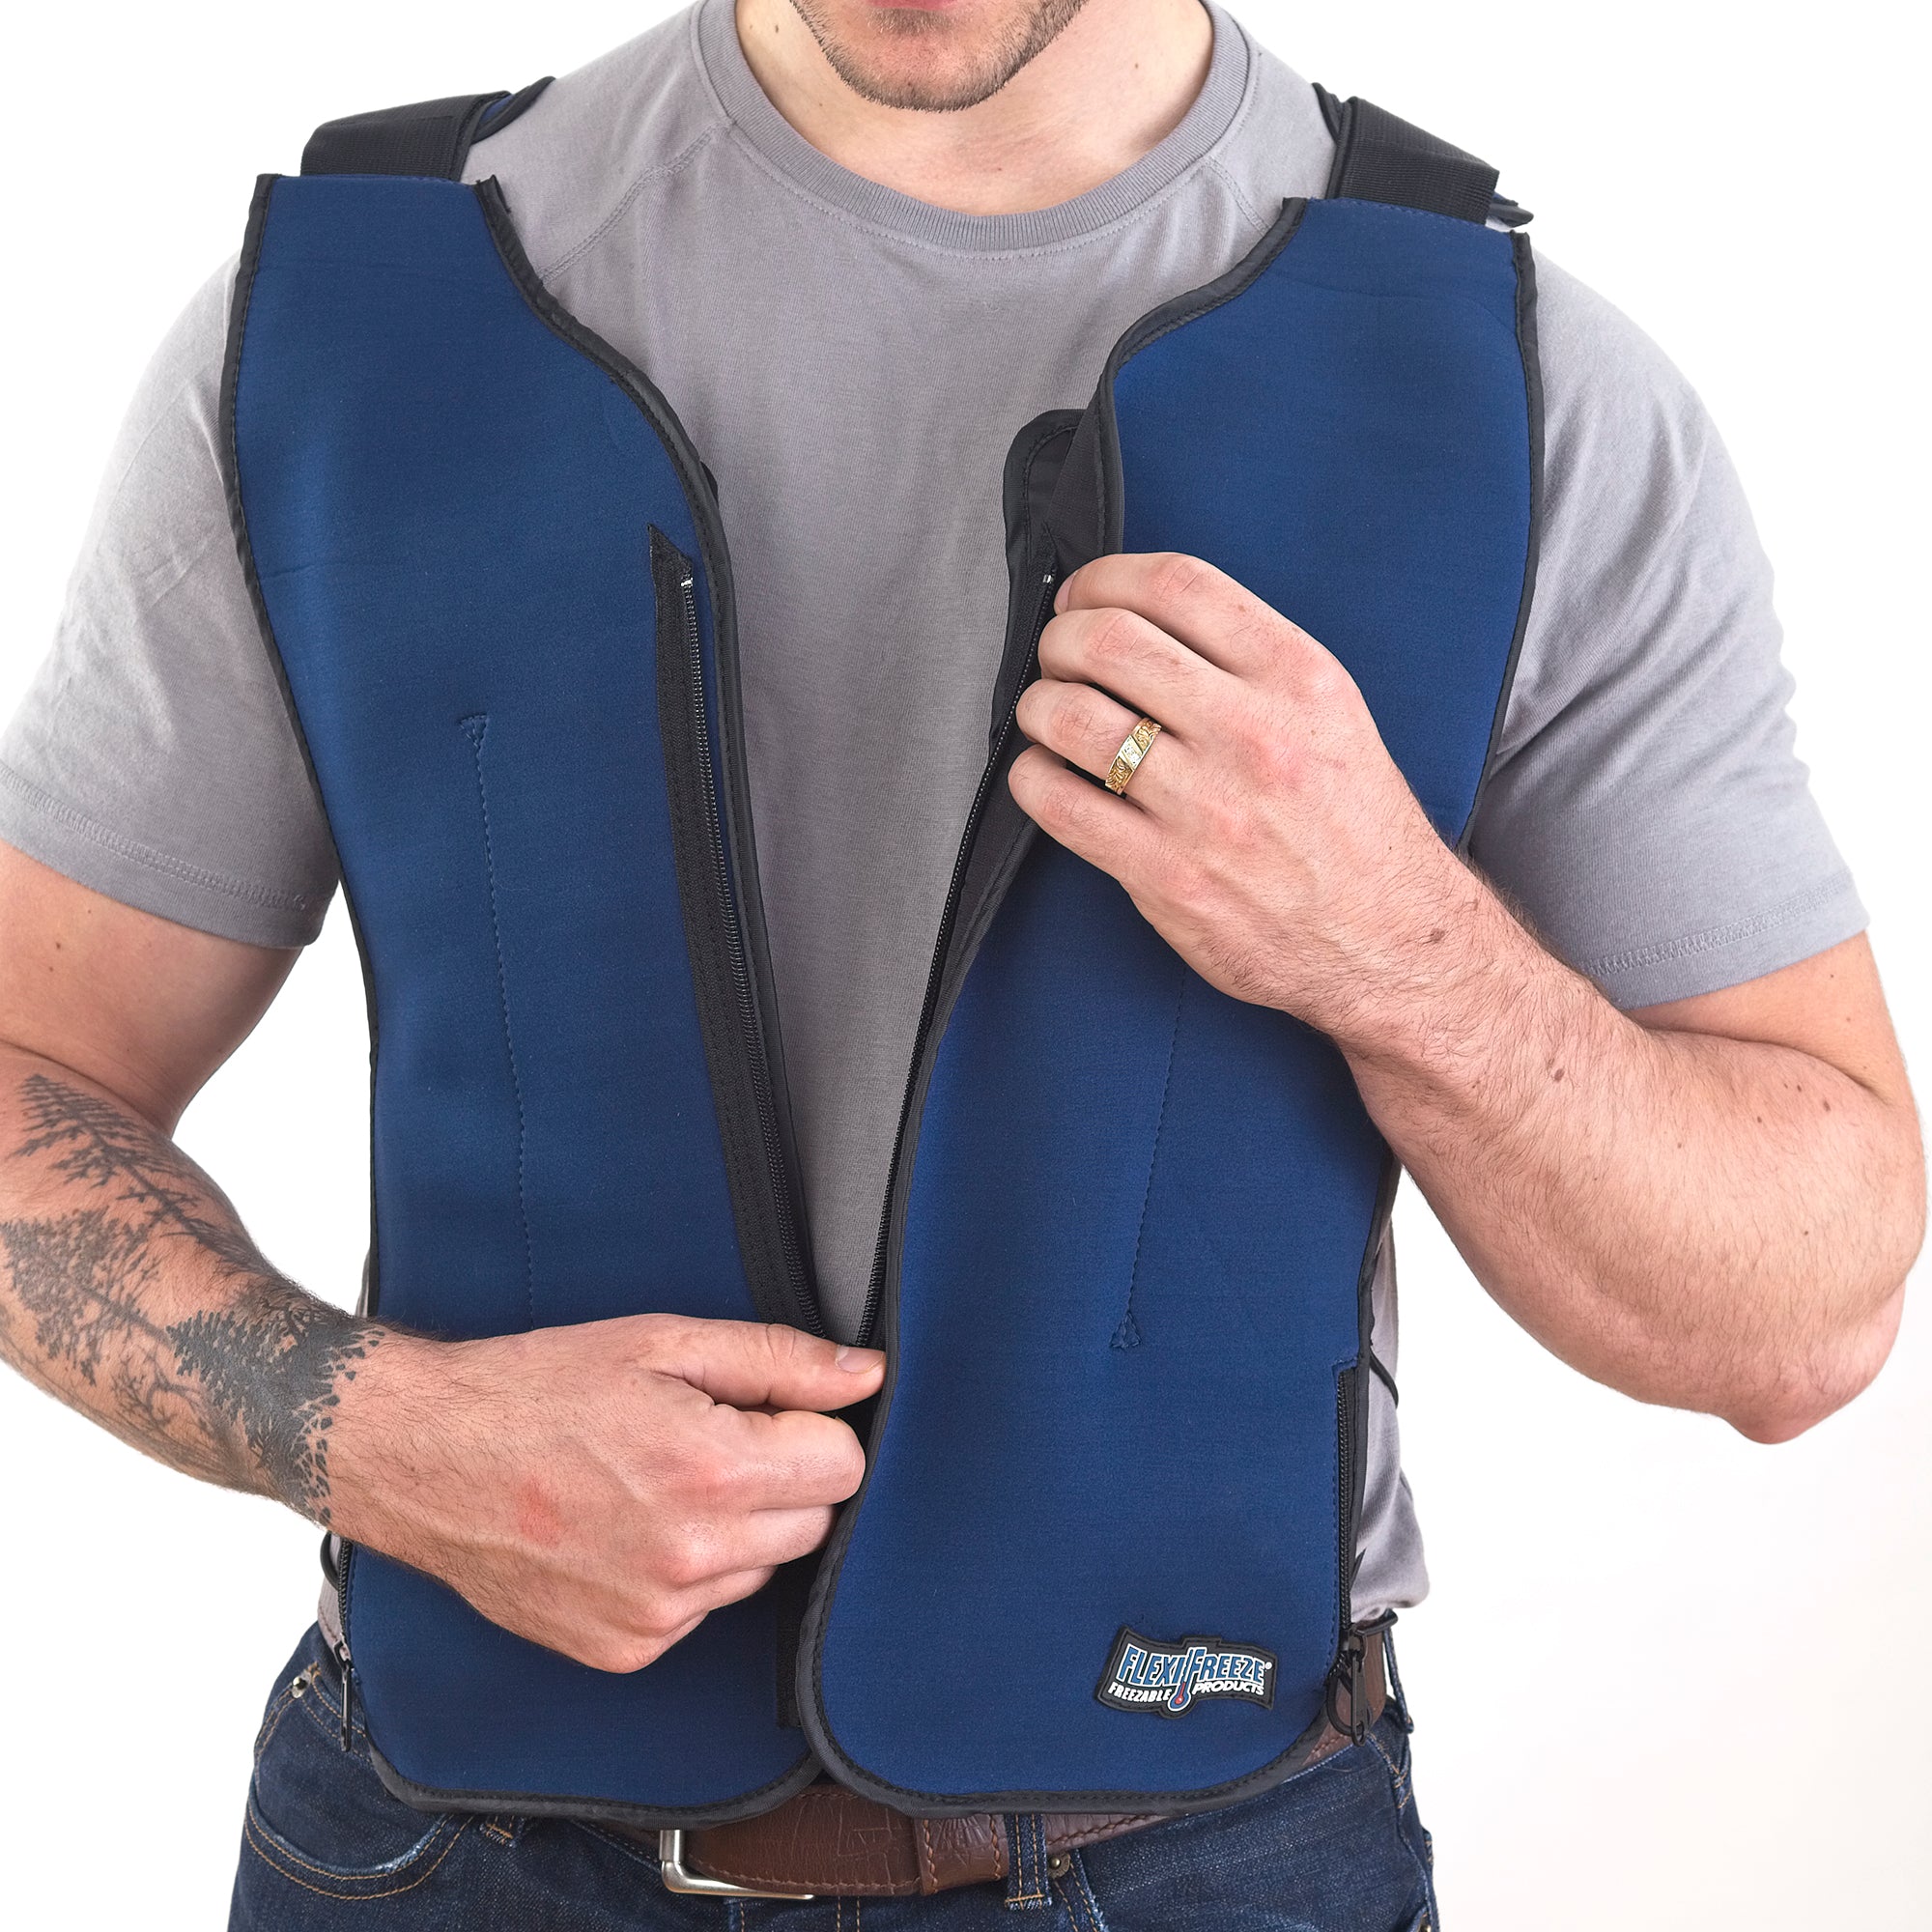 Man unzipping FlexiFreeze personal zipper ice vest, blue, open, front view